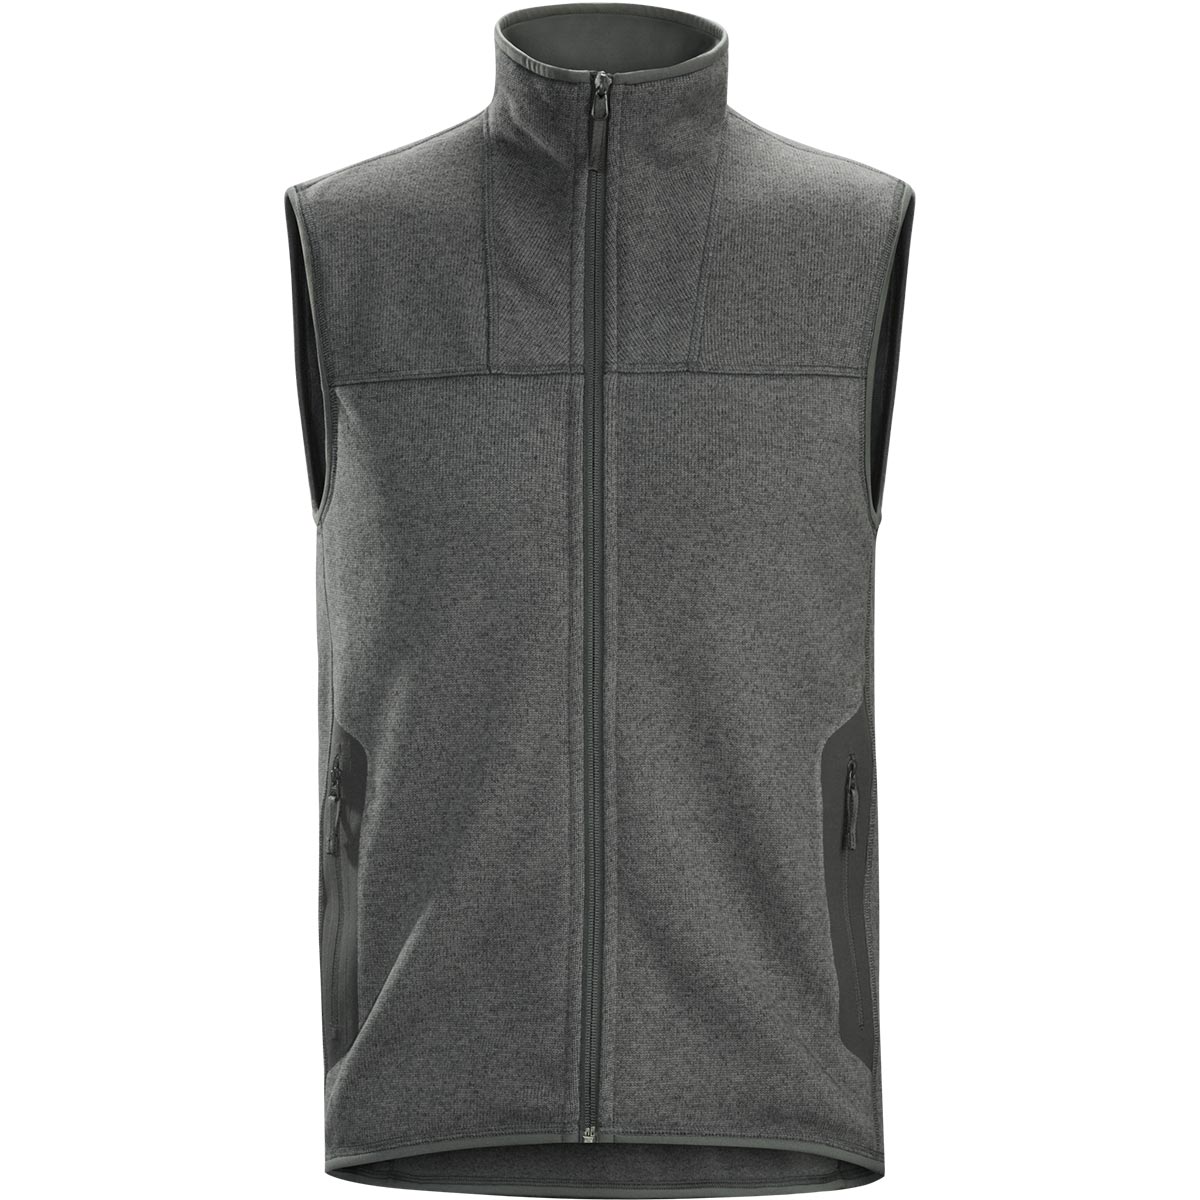 Arc'teryx Covert Vest, men's, discontinued Spring 2019 model ...